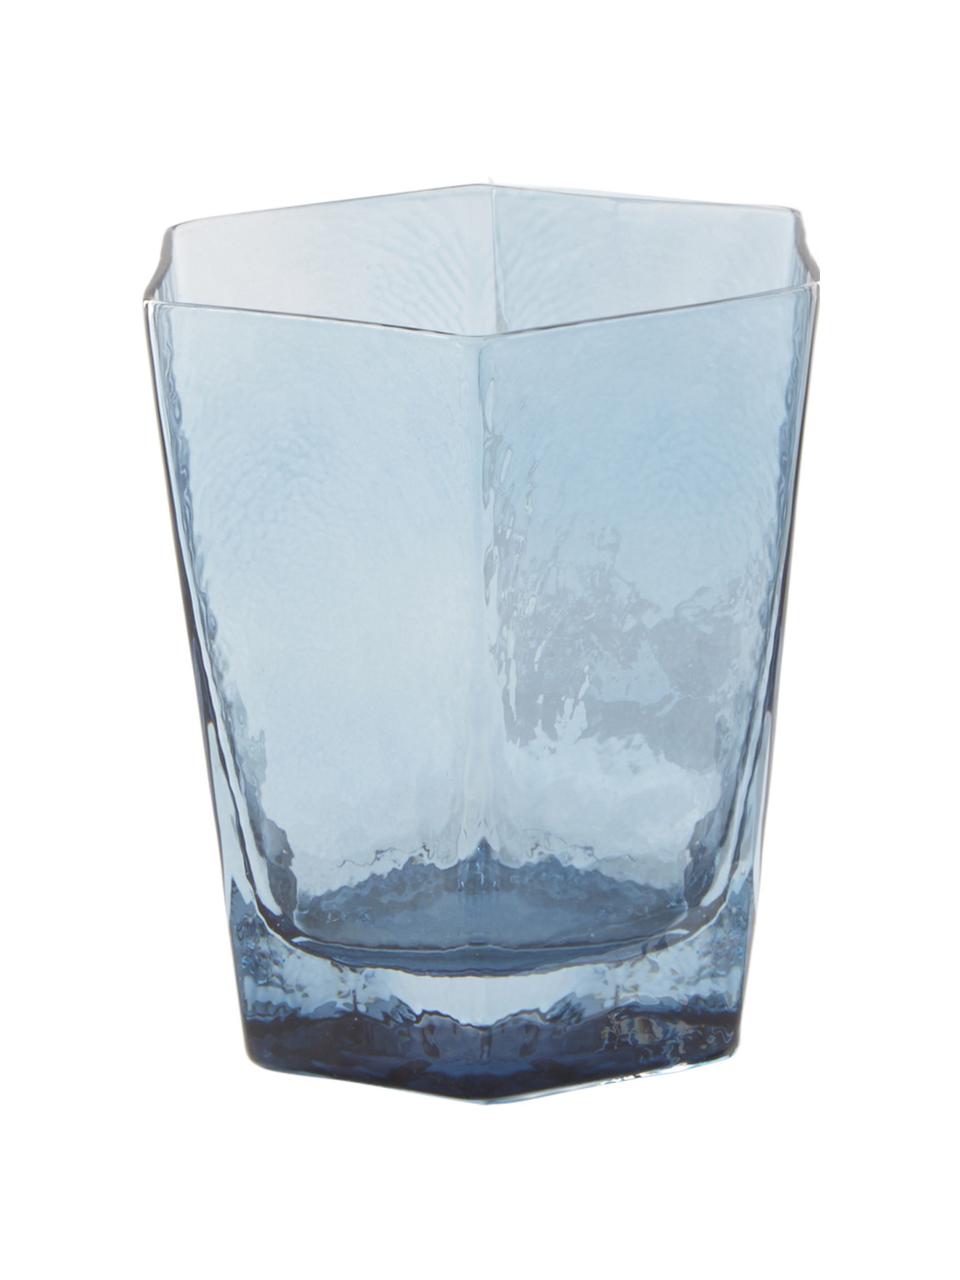 Waterglazen Amory in blauw, 4 stuks, Glas, Blauw, transparant, Ø 10 x H 11 cm, 380 ml